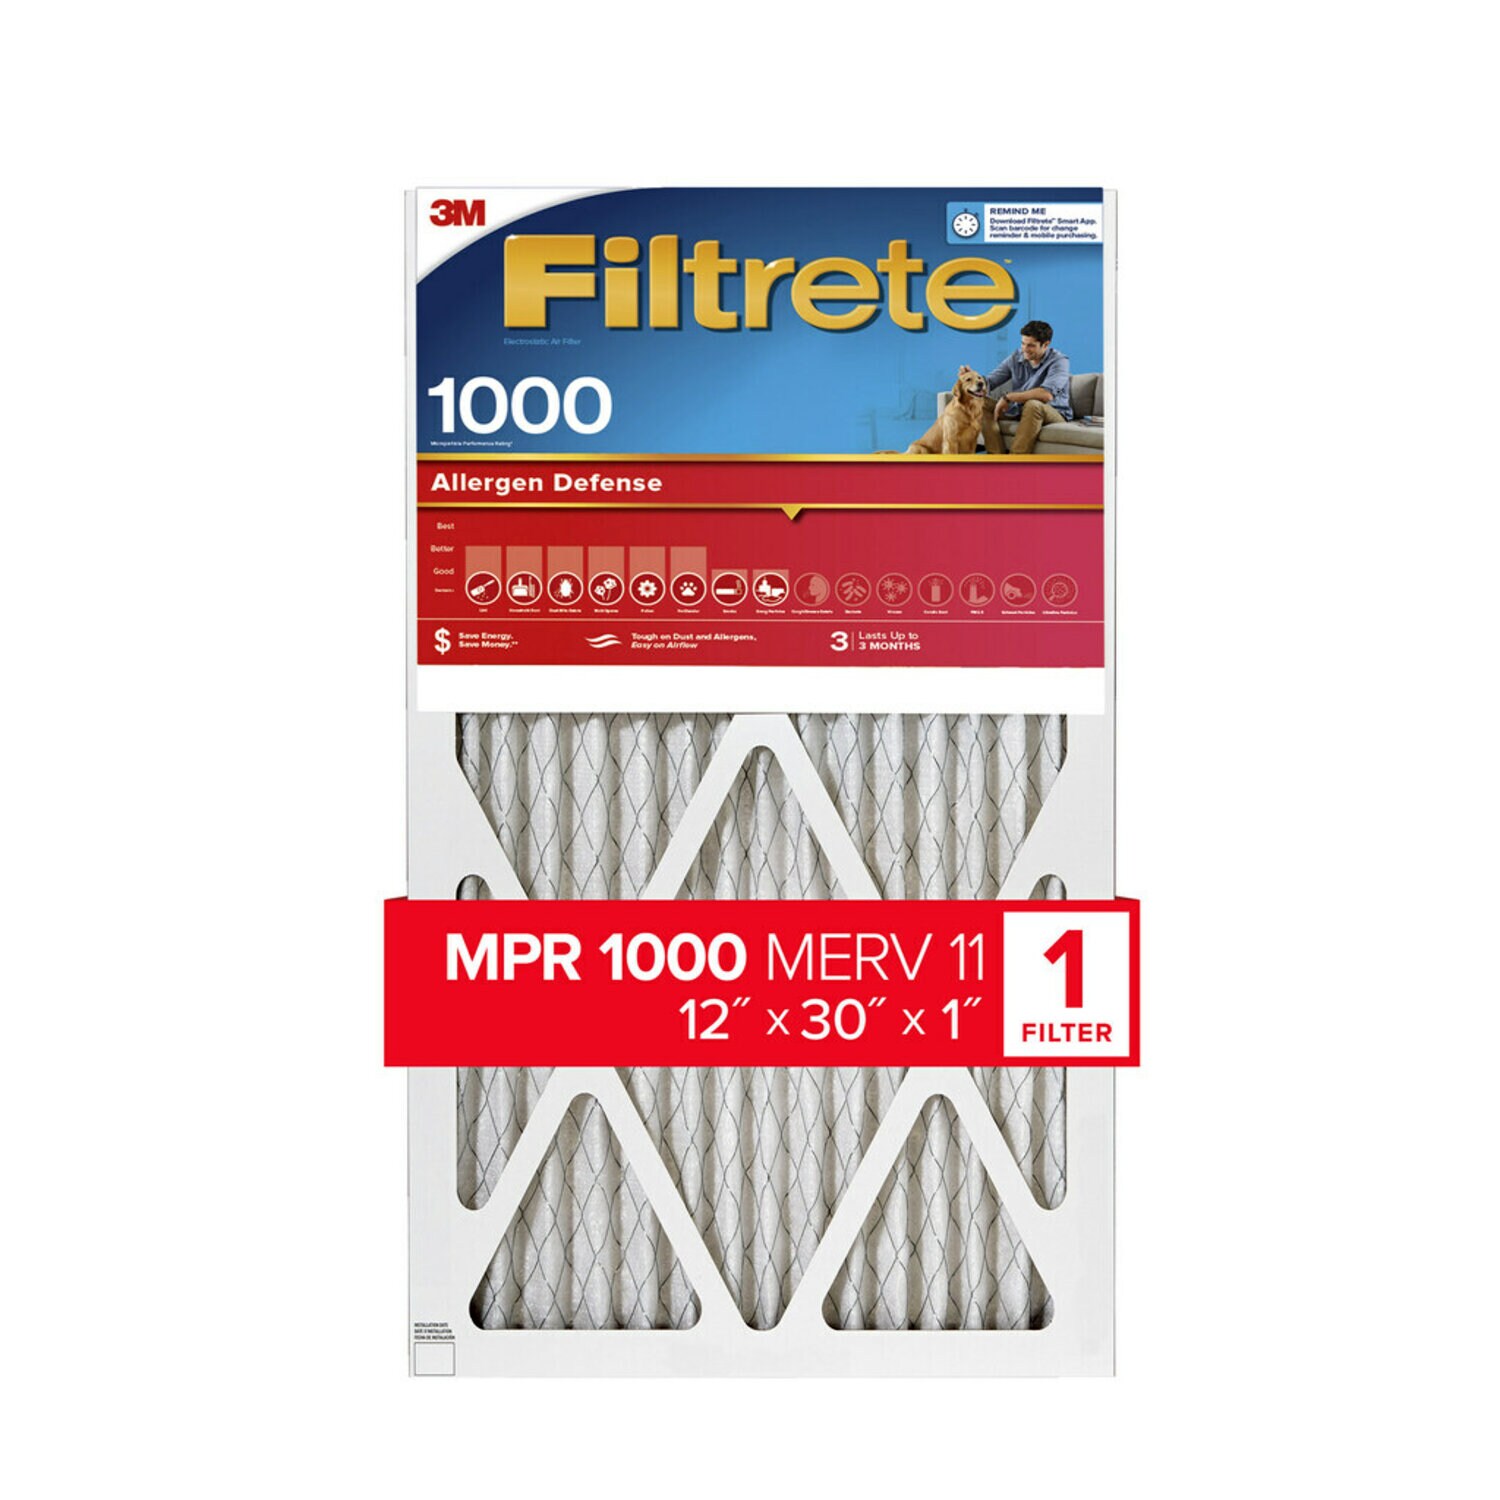 7100192554 - Filtrete Allergen Defense Air Filter, 1000 MPR, AL42-4, 12 in x 30 in x
1 in (30,4 cm x 76,2 cm x 2,5 cm)